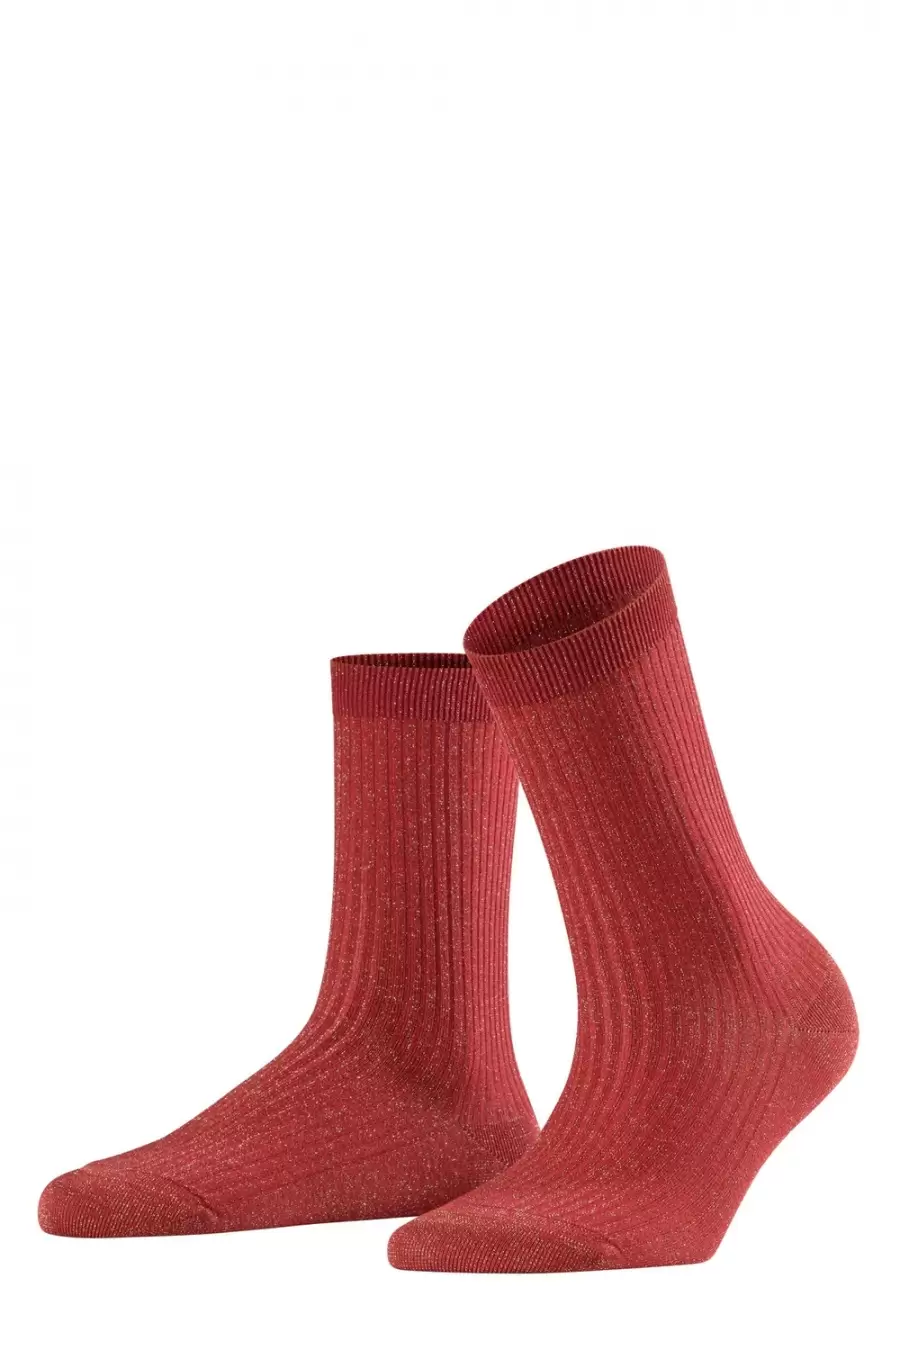 Falke 46333 Shiny Rib SO, женские носки (изображение 1)